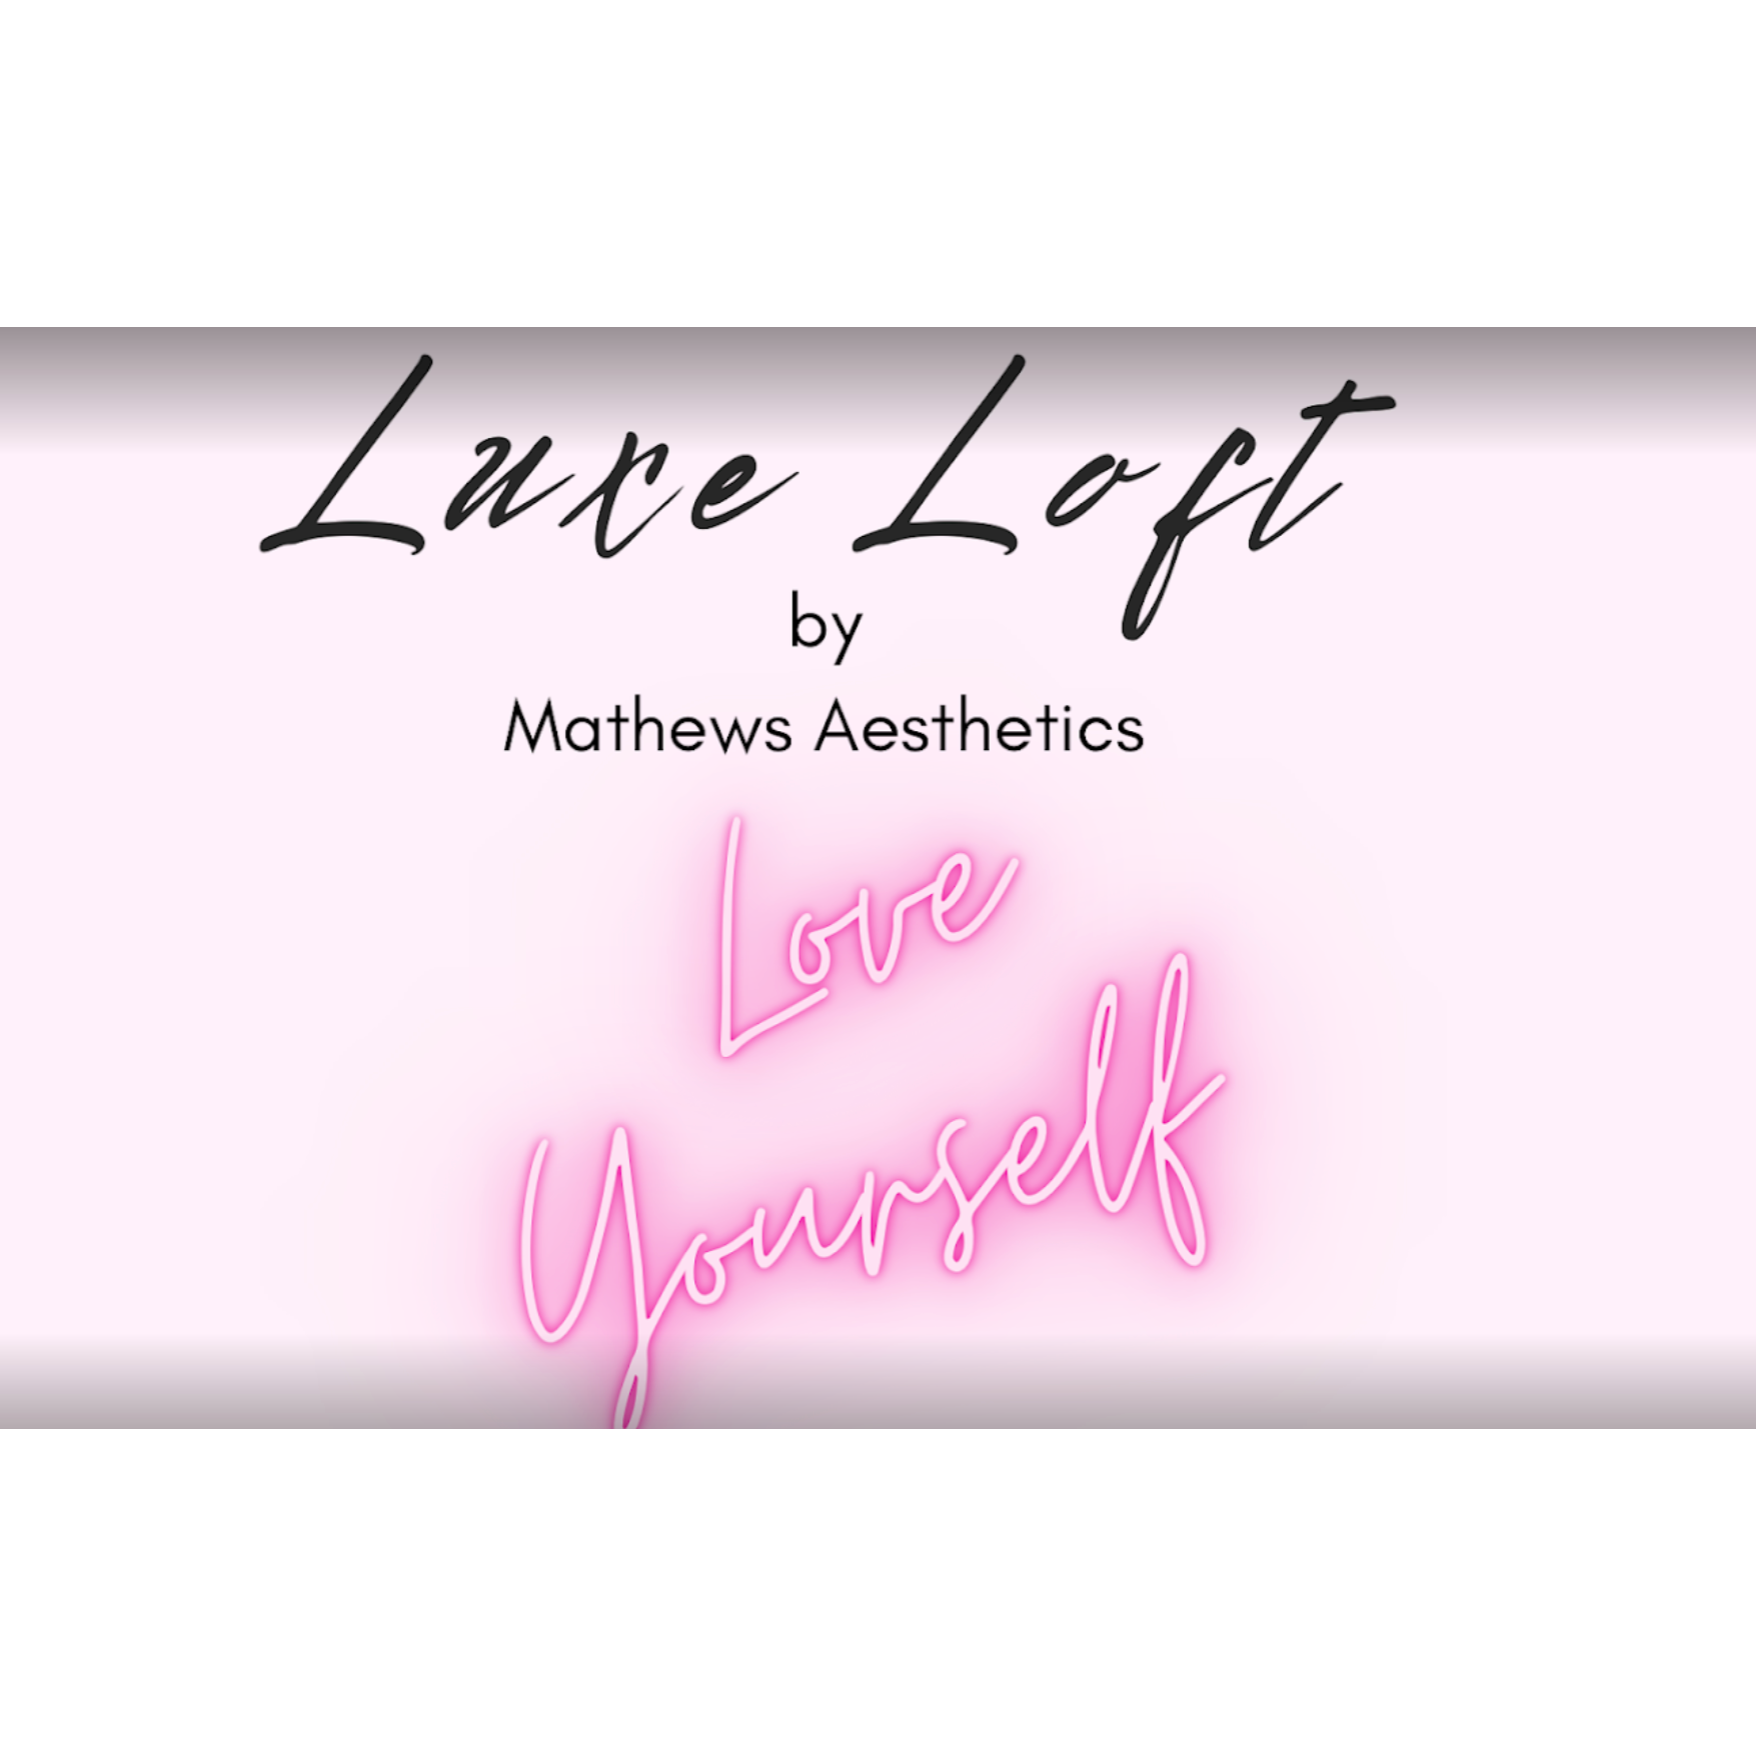 Luxe Loft by Mathews Aesthetics